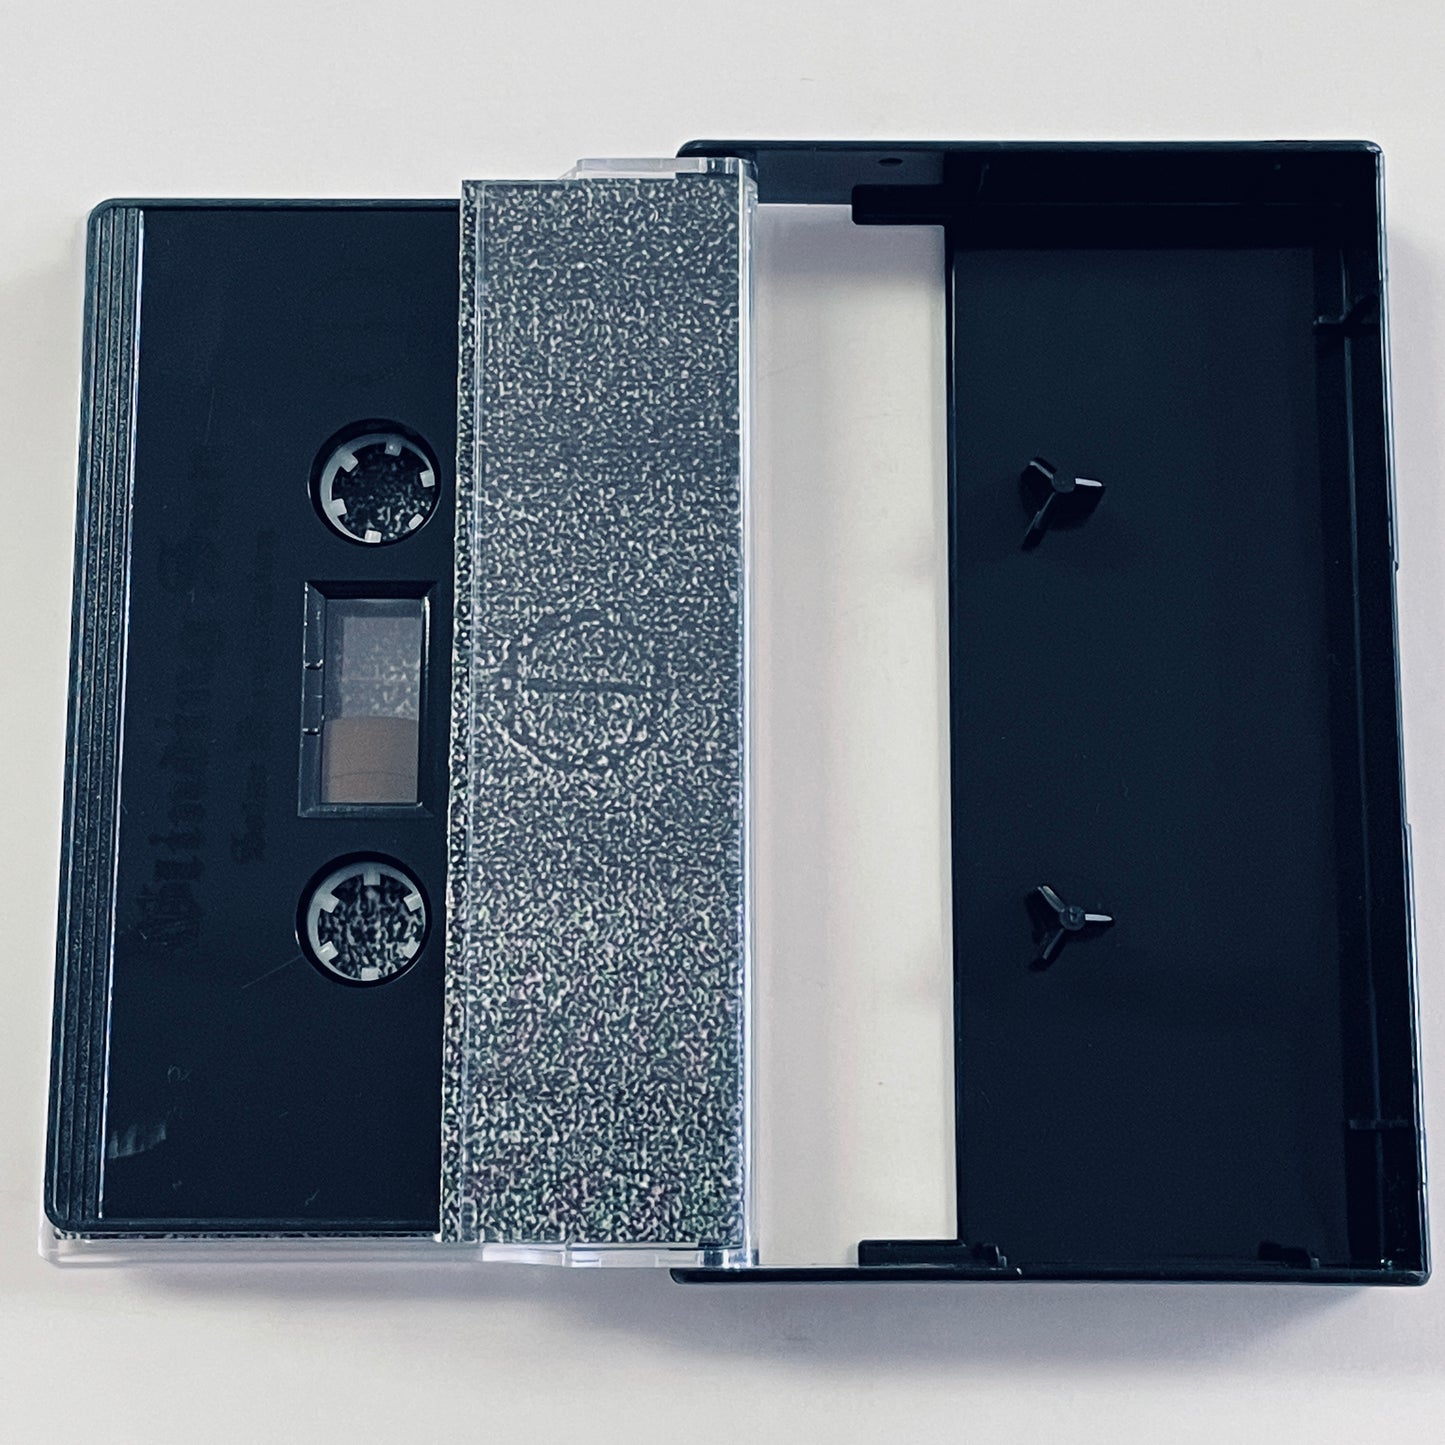 Blinding Sun - Solar Humiliation cassette tape (used)